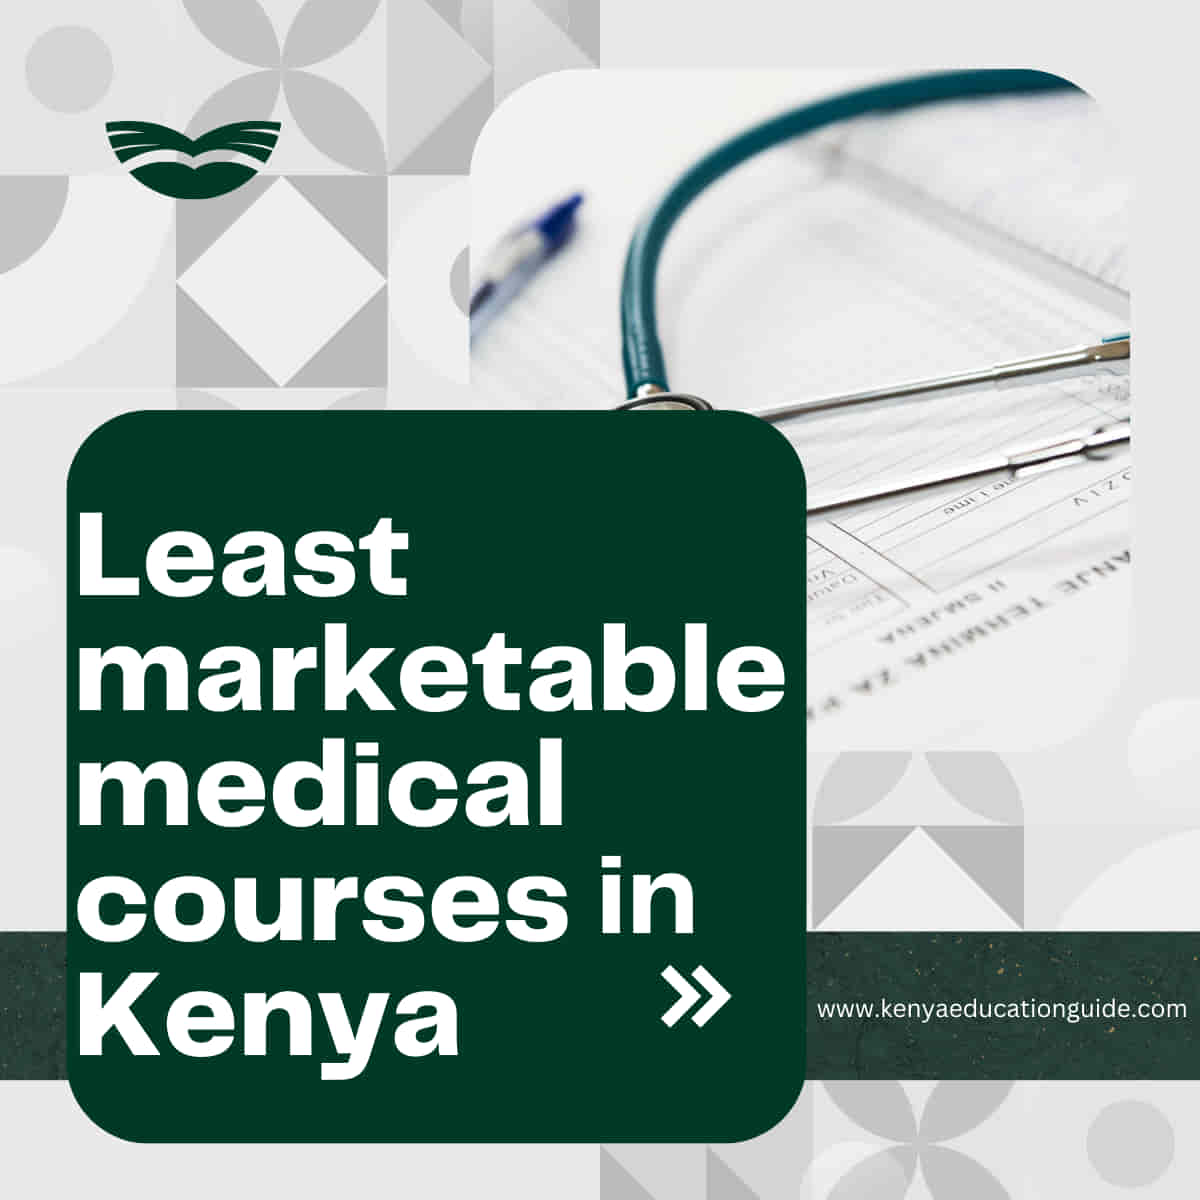 Least marketable medical courses in Kenya